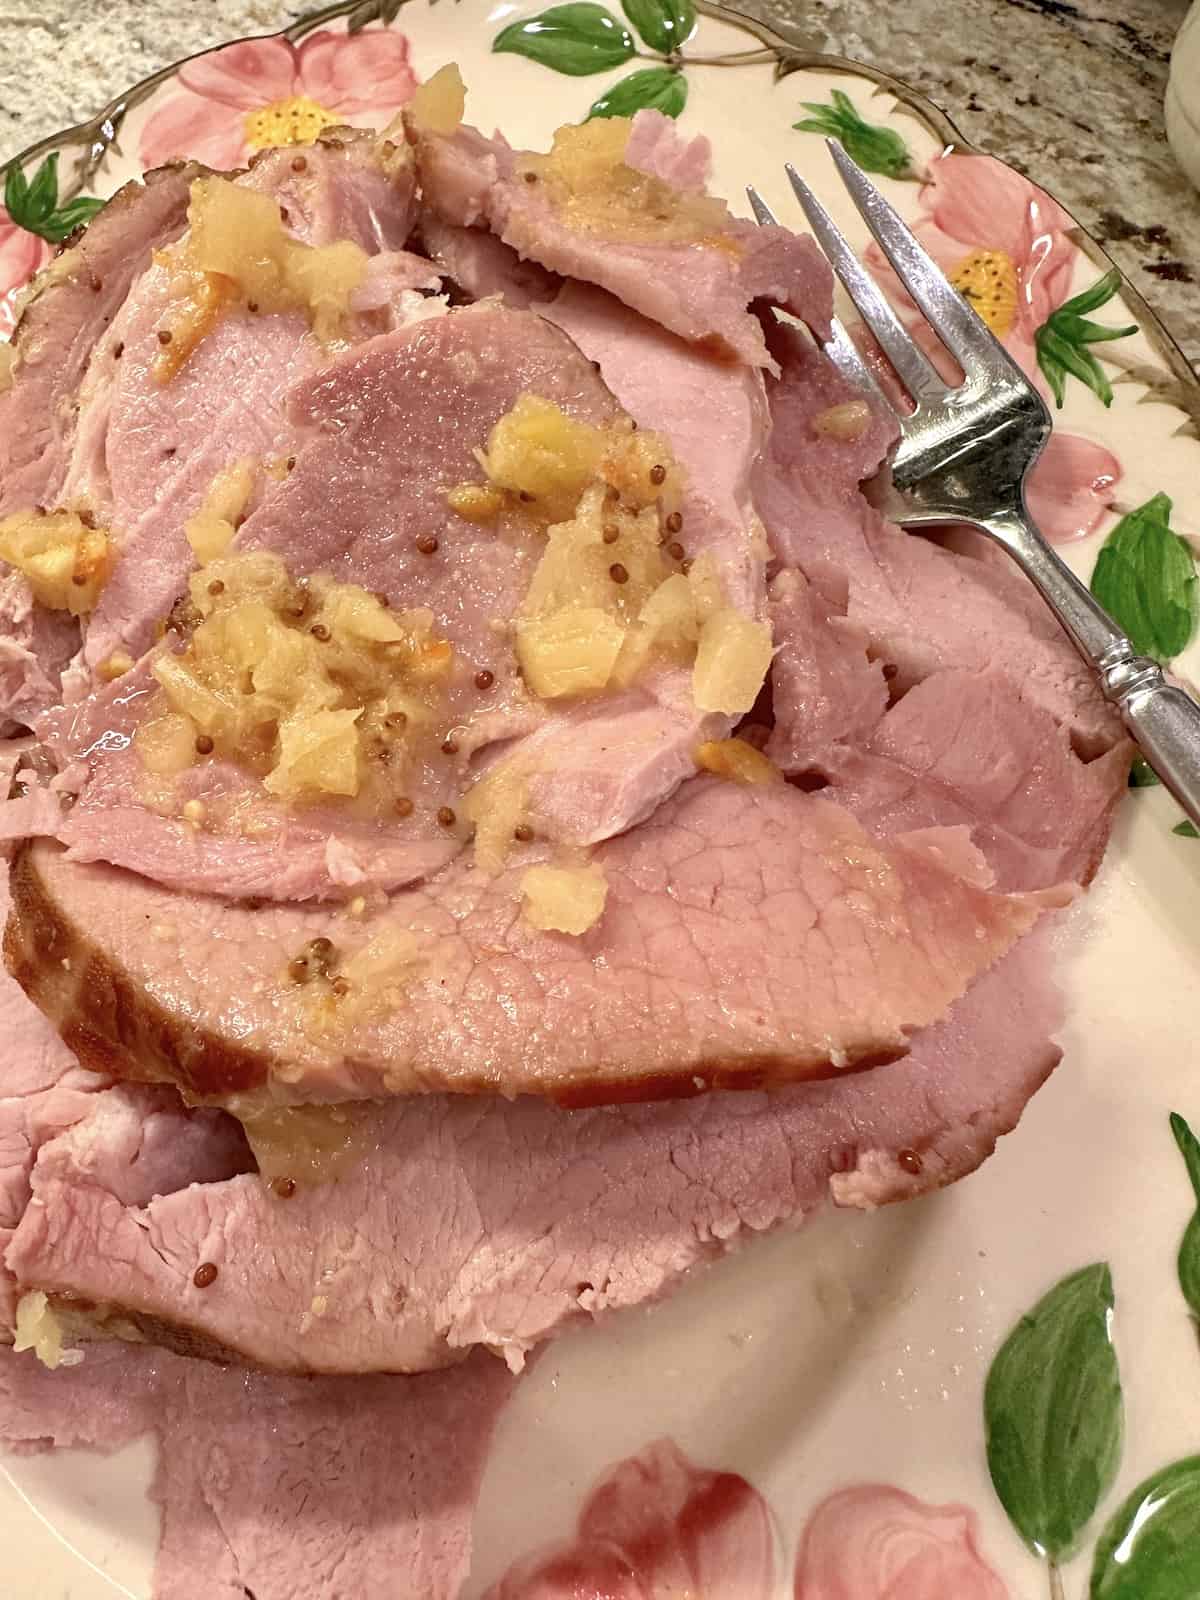 Sliced ham on a plate.